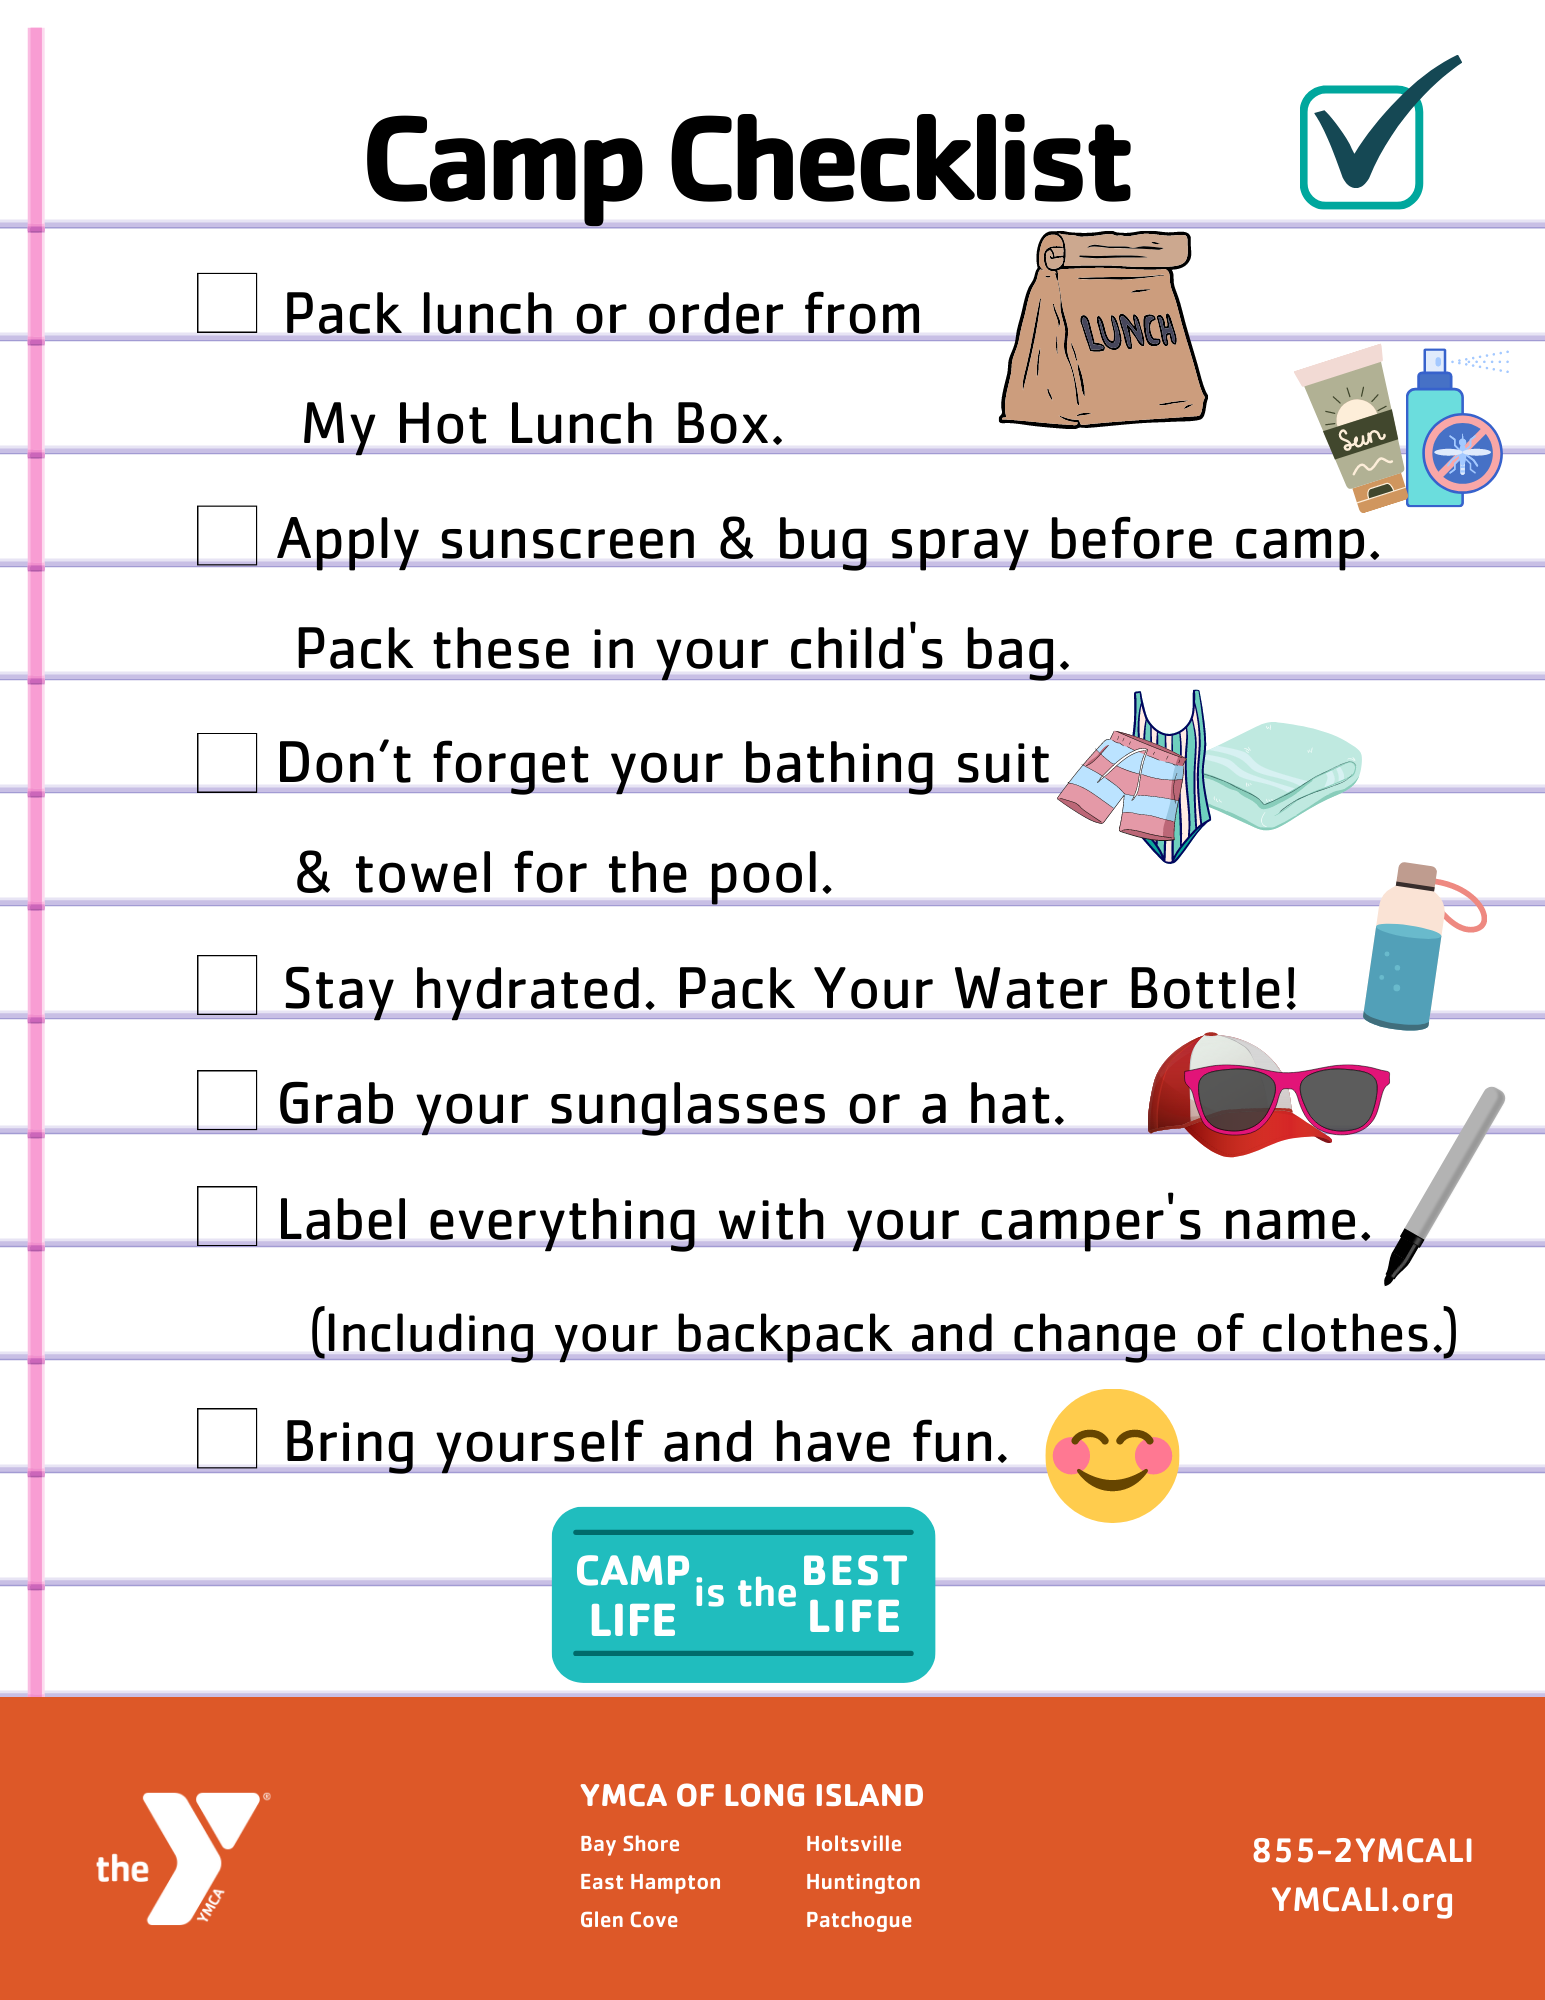 Camp checklist 